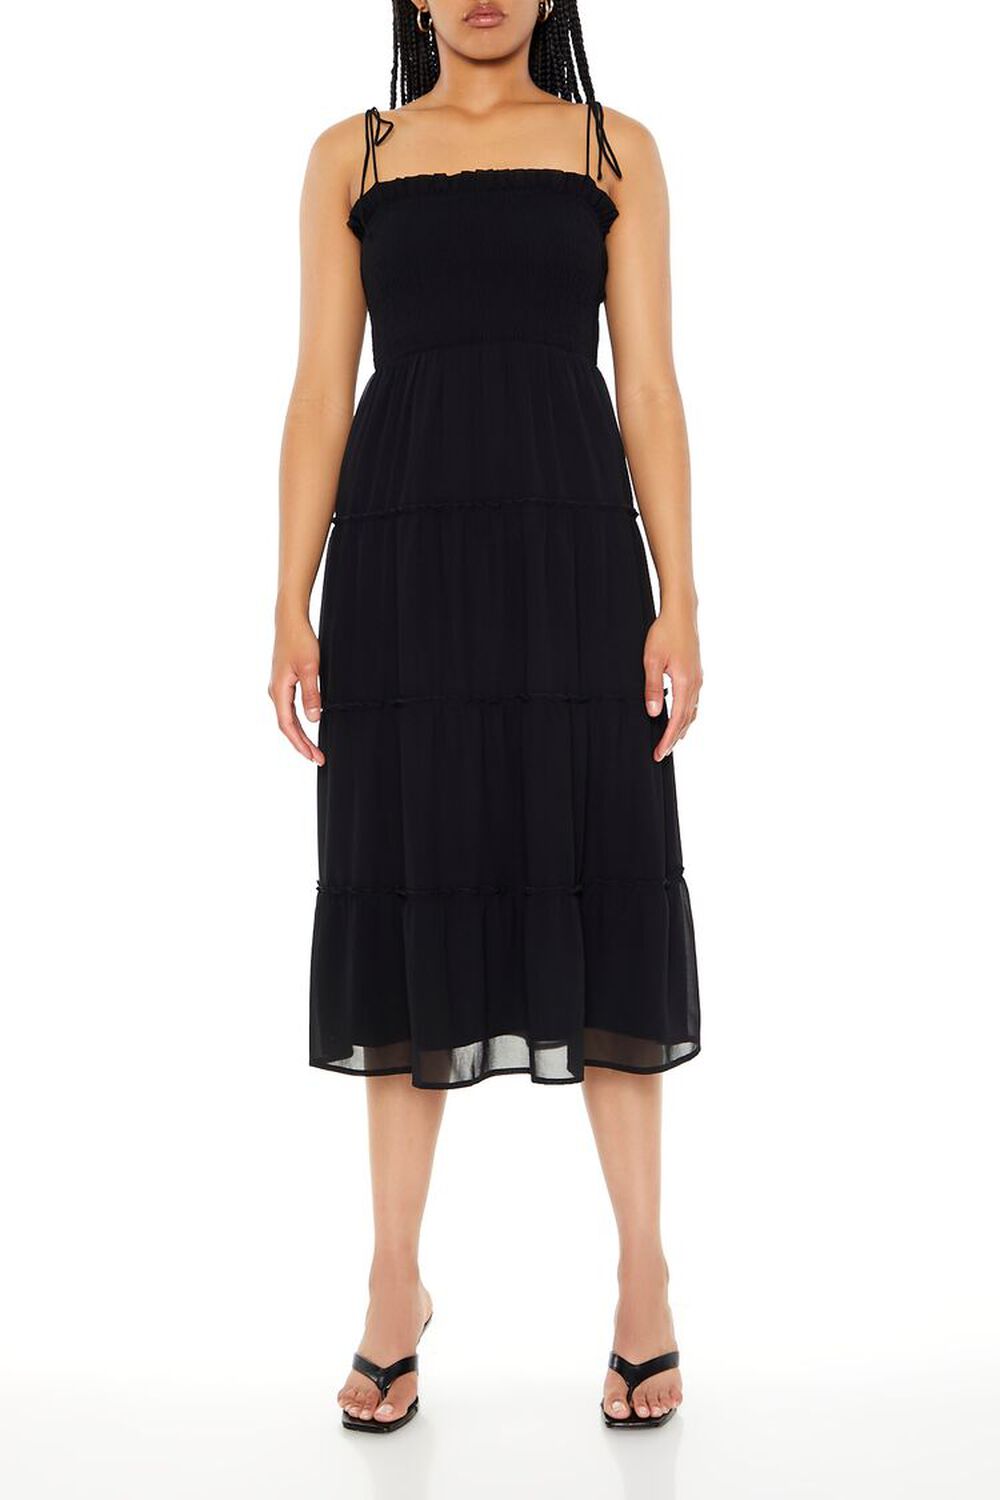 BLACK Tiered Self-Tie Cami Midi Dress, image 1